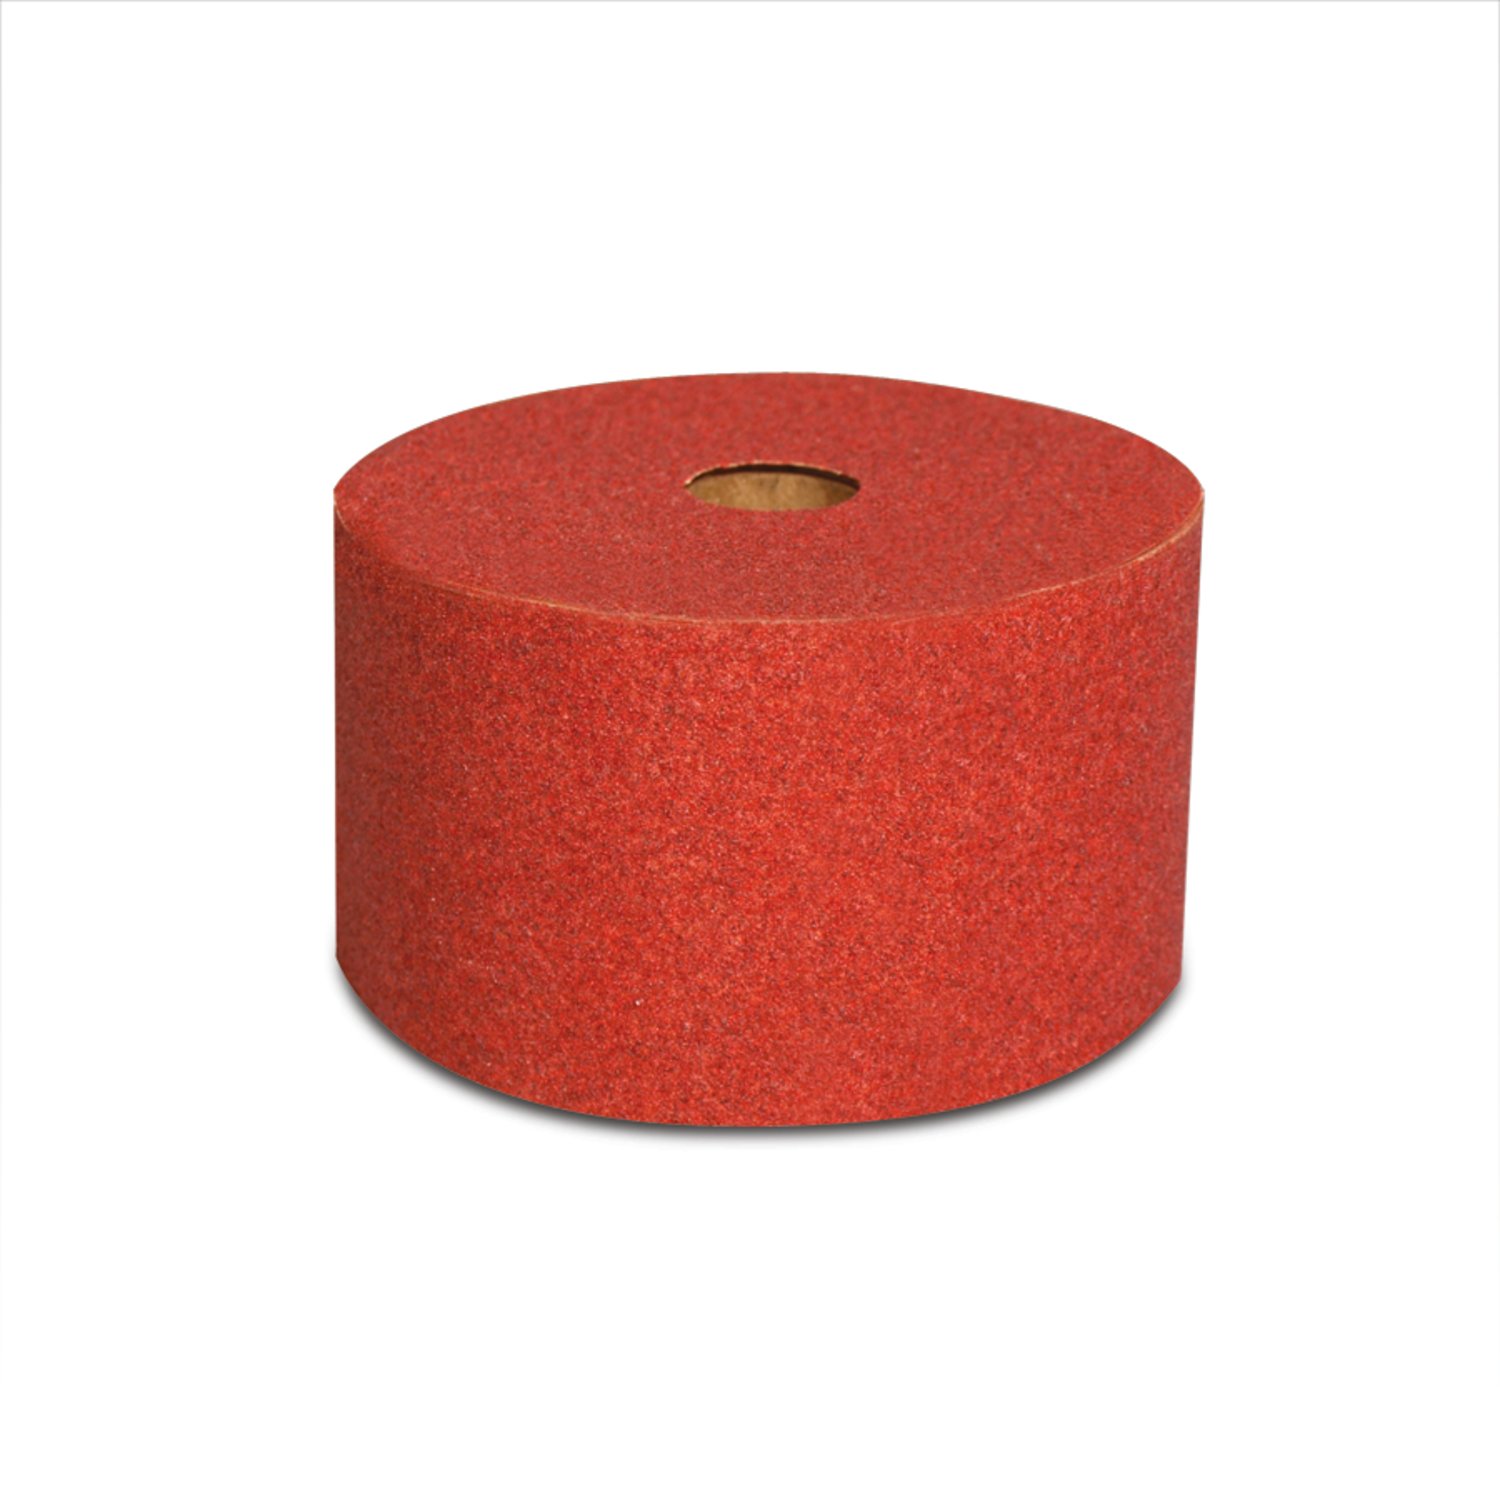 7000119930 - 3M Red Abrasive Stikit Sheet Roll, 01687, P120, 2-3/4 in x 25 yd, 6
rolls per case